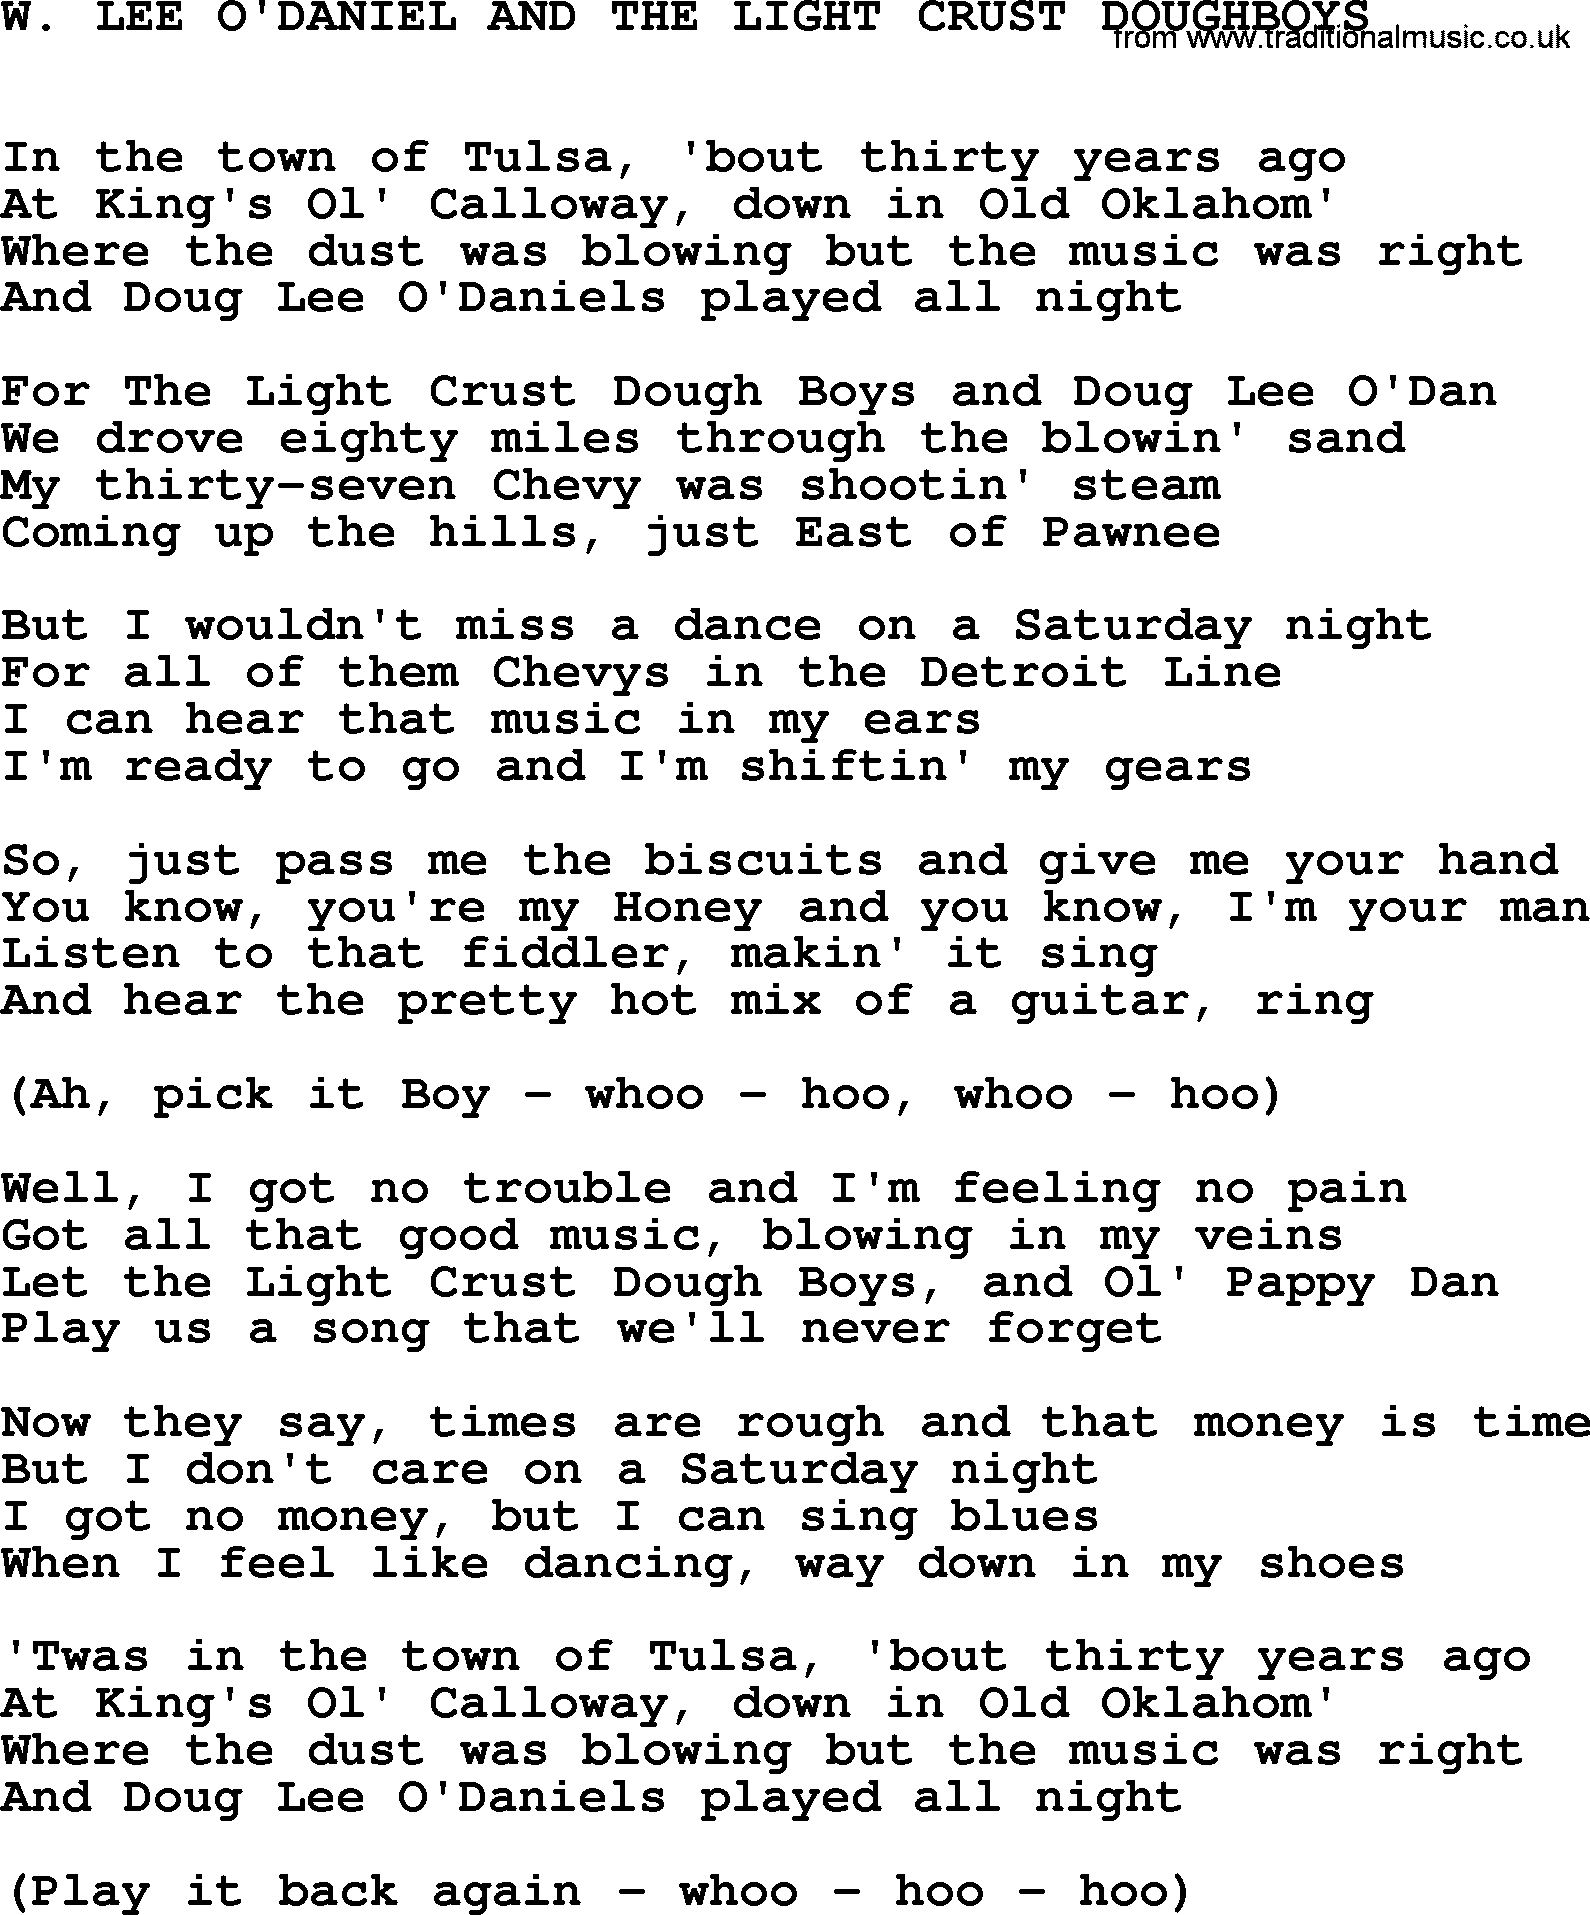 Johnny Cash song W. Lee O'daniel And The Light Crust Doughboys.txt lyrics